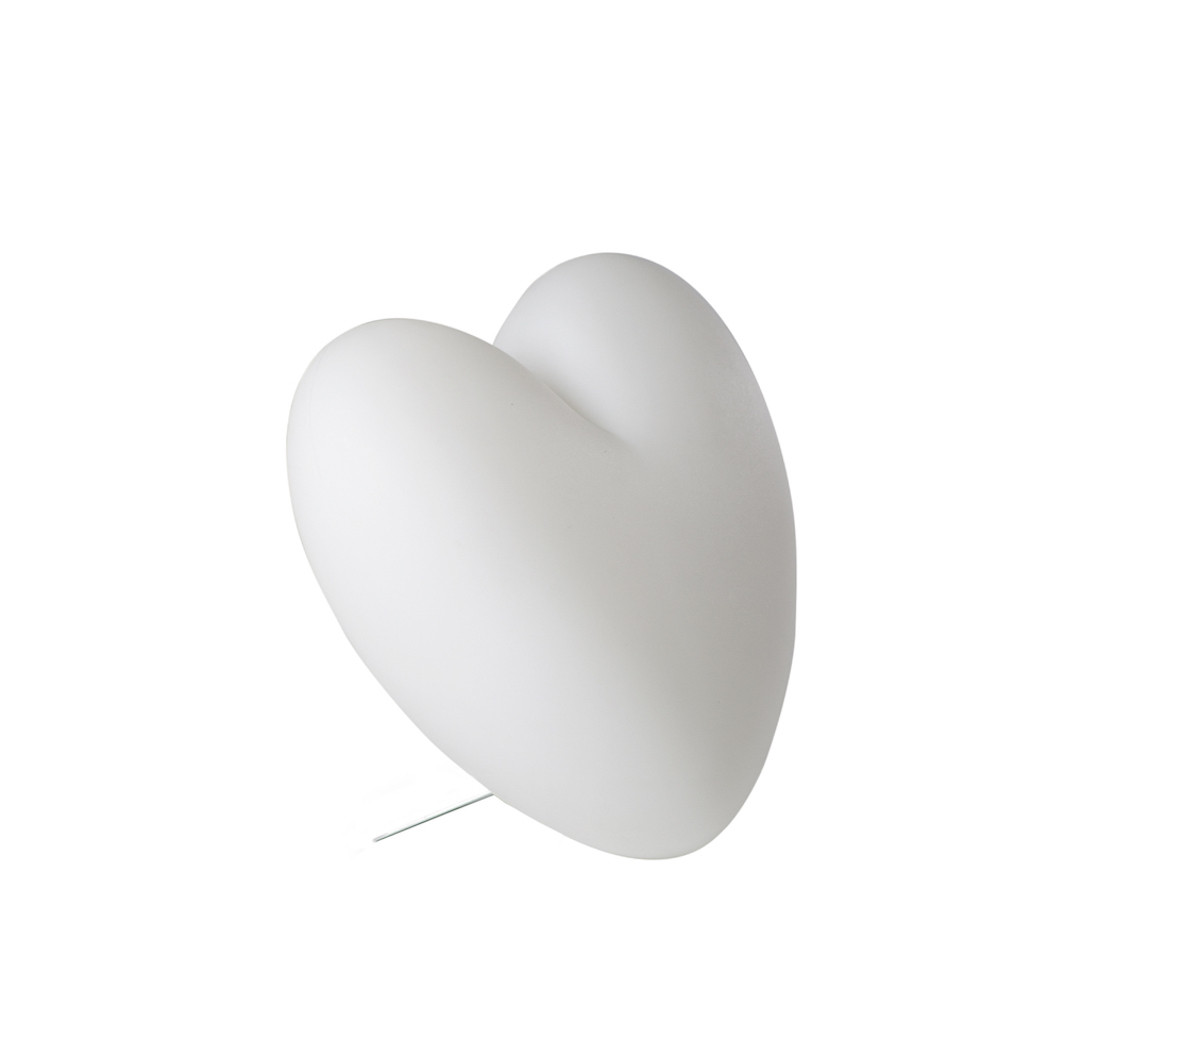 LOVE Lampe à poser Coeur H40cm Blanc Slide - LightOnline